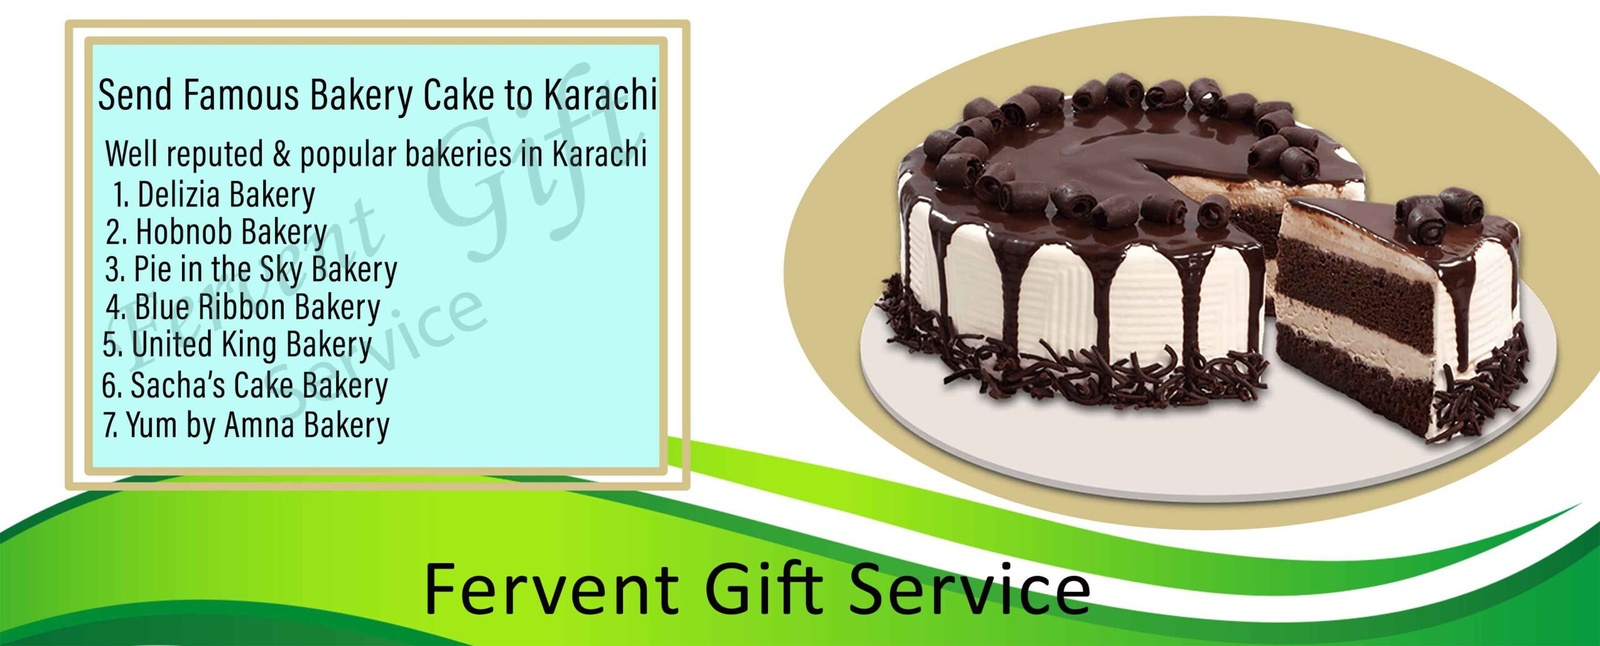 Popular bakers in Karachi - Send bakery cakes Karachi same day